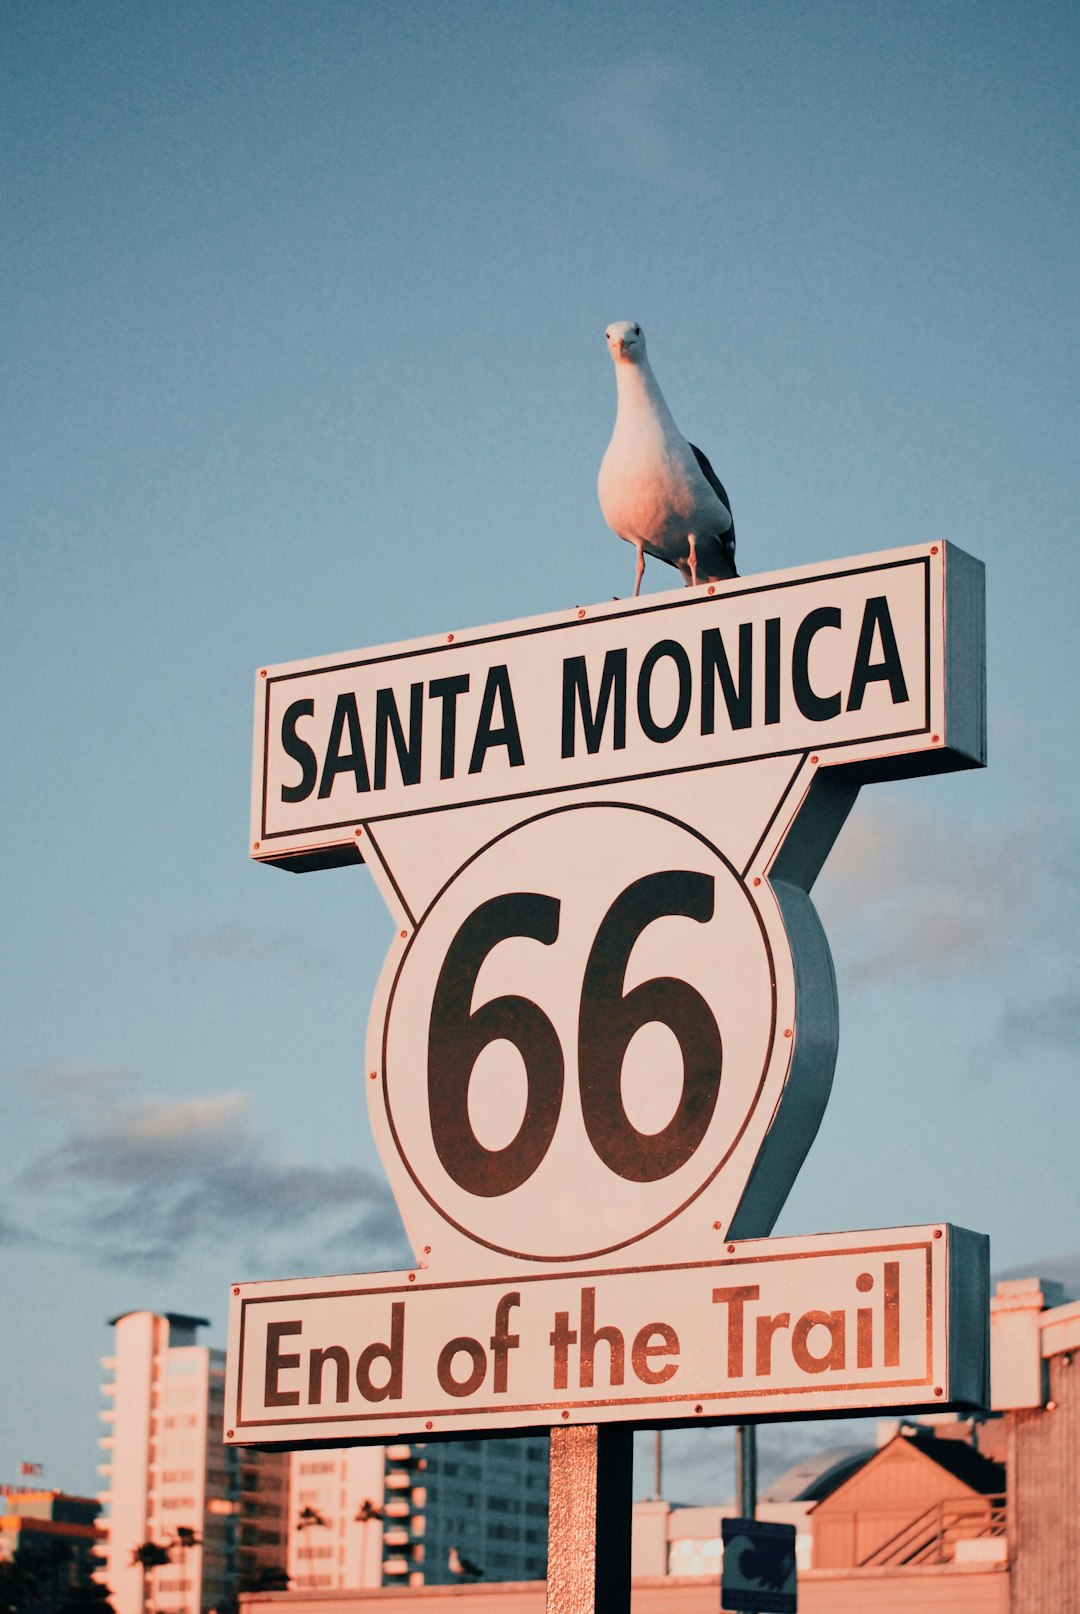 Santa Monica 66 signage